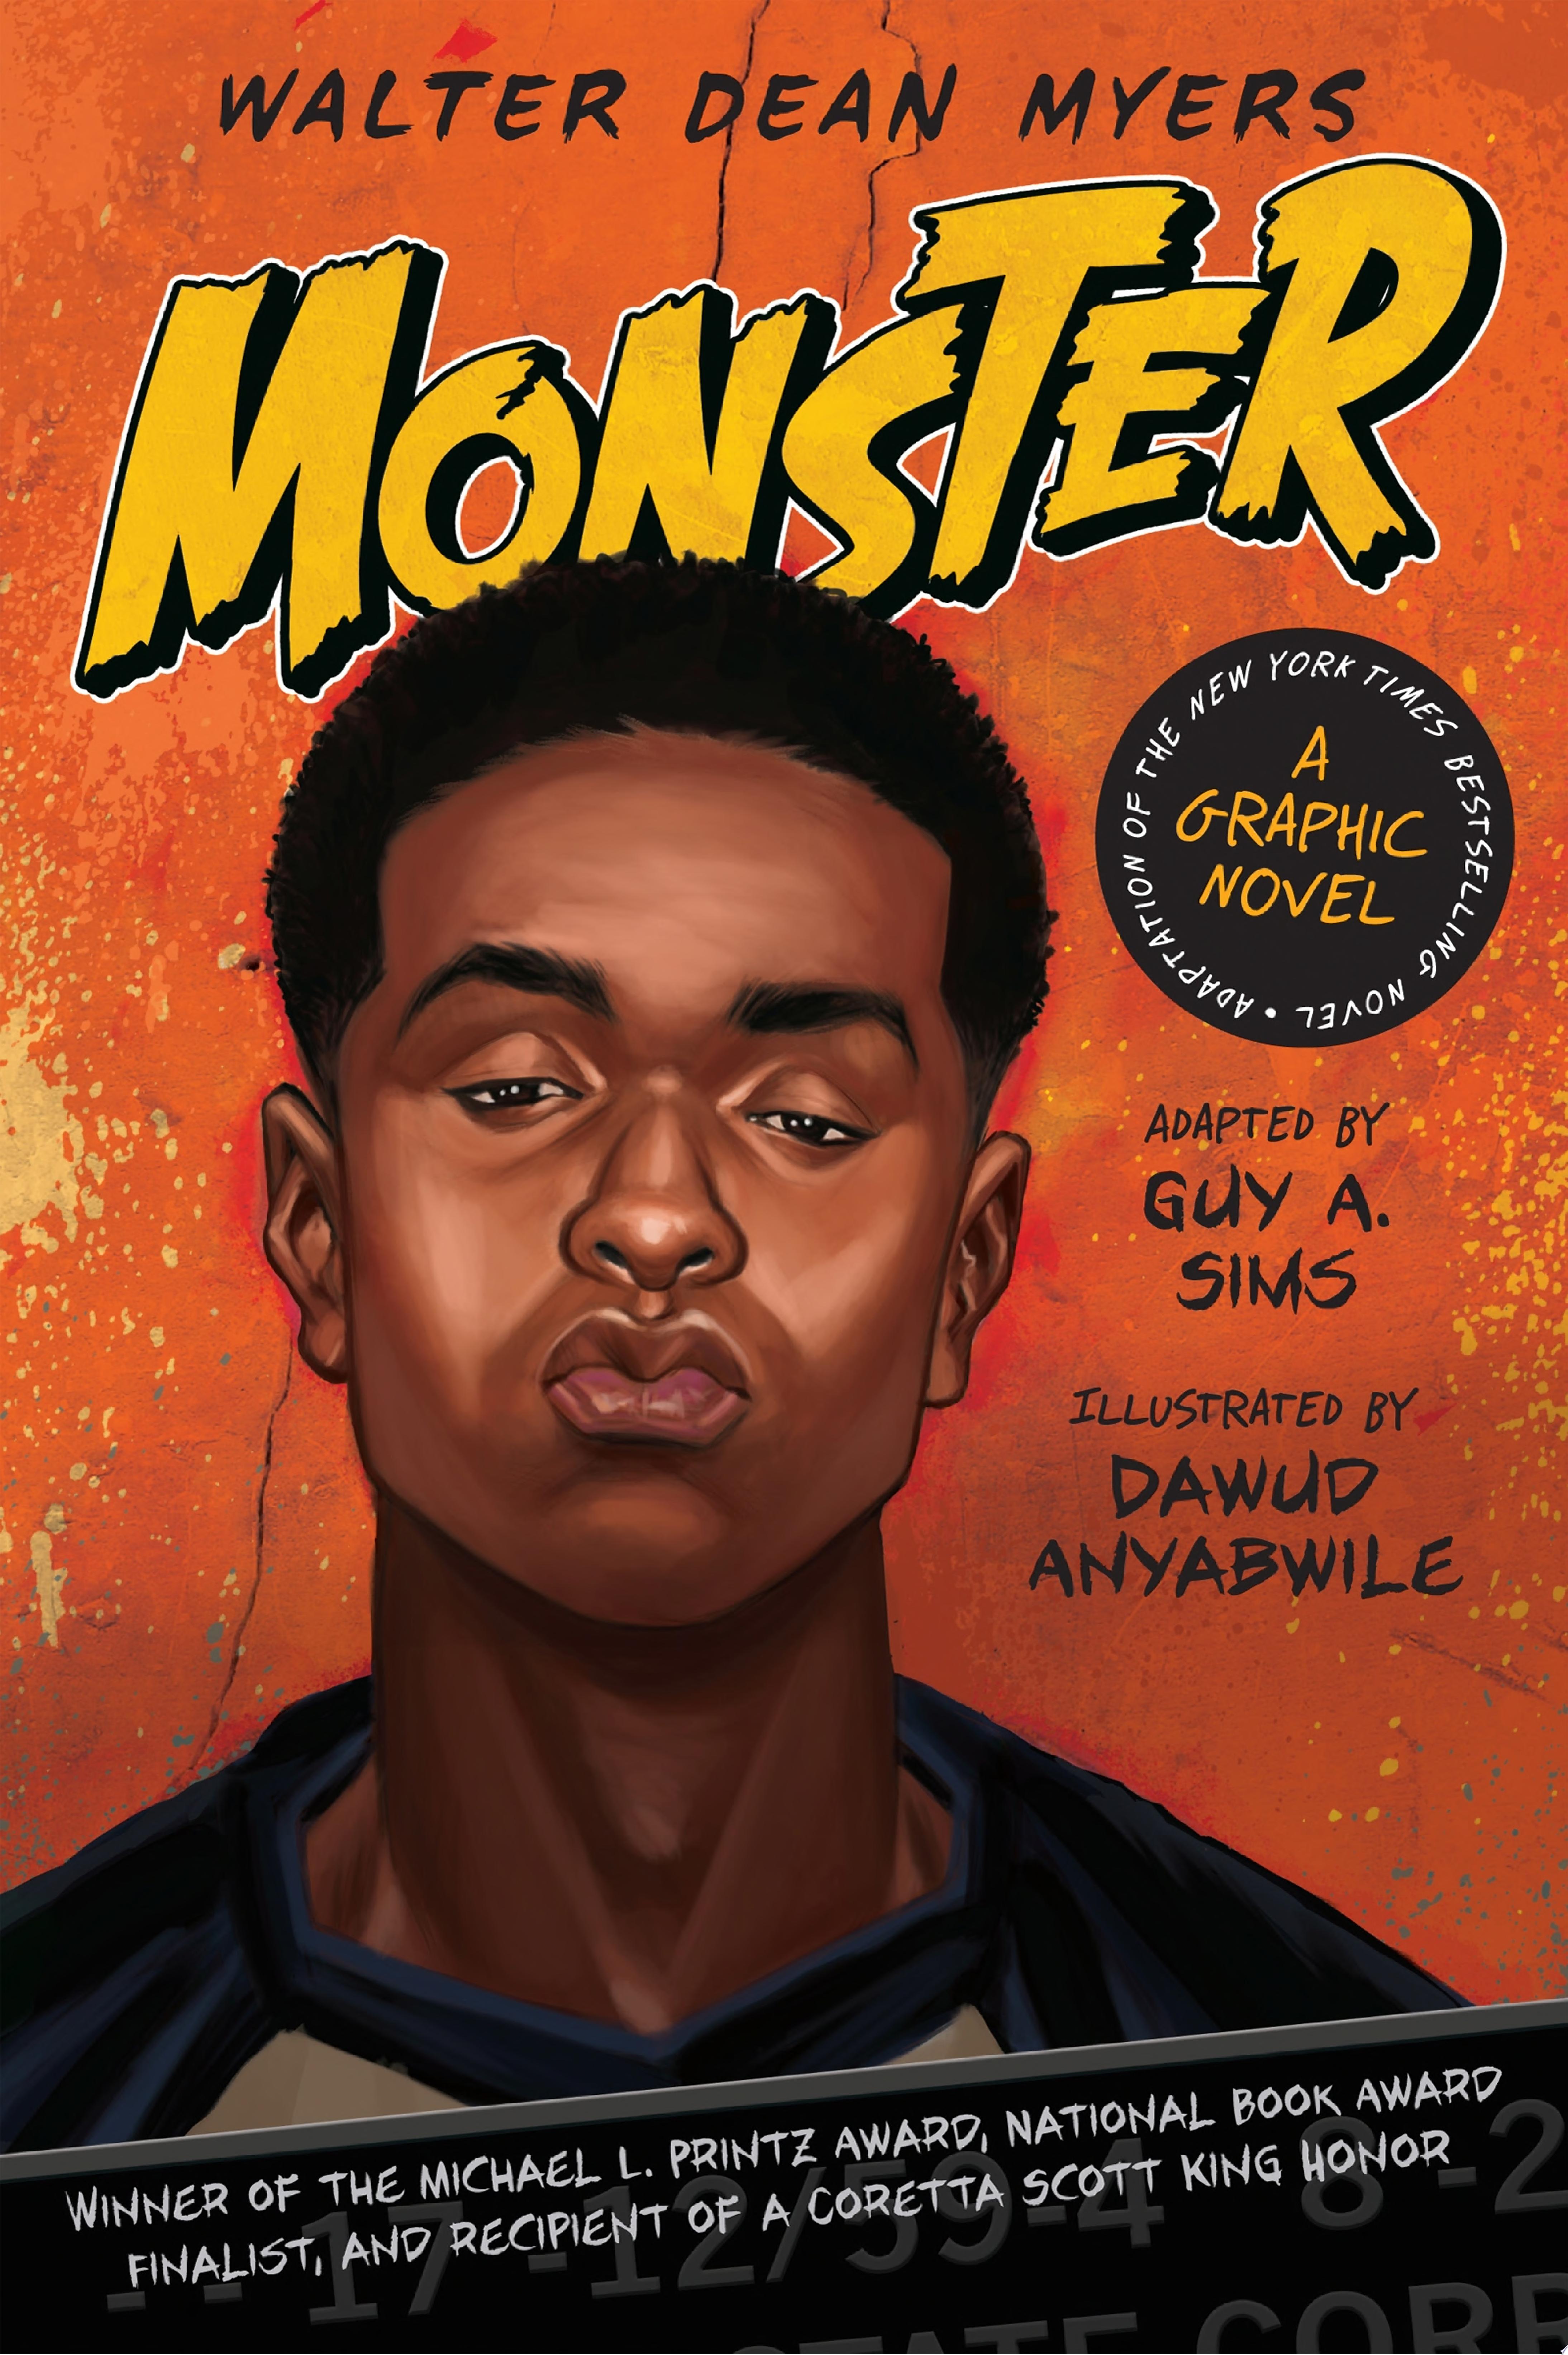 Image for "Monster: A Graphic Novel"